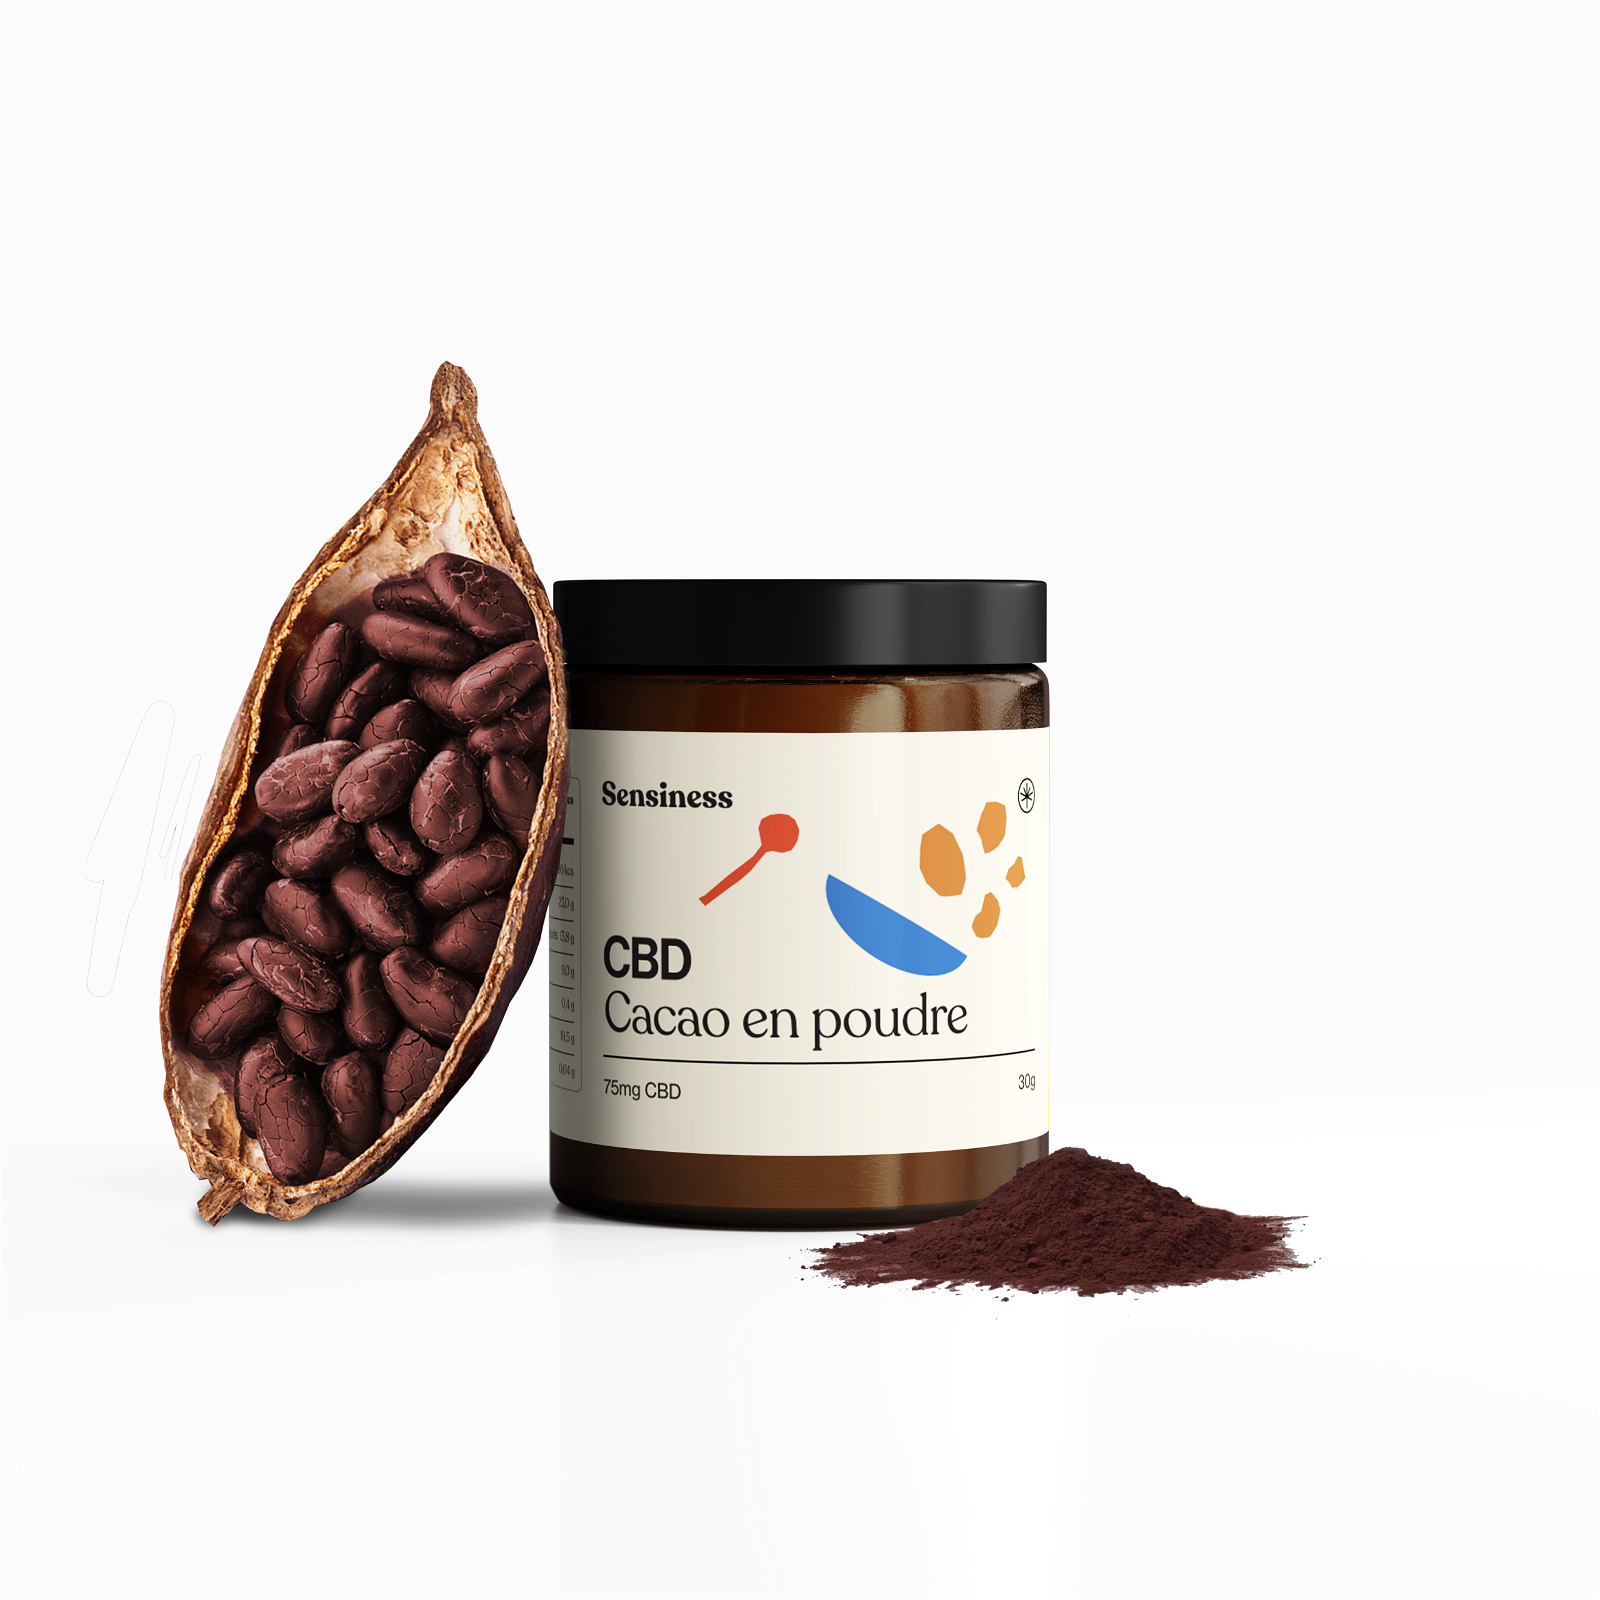 Cacao en poudre CBD